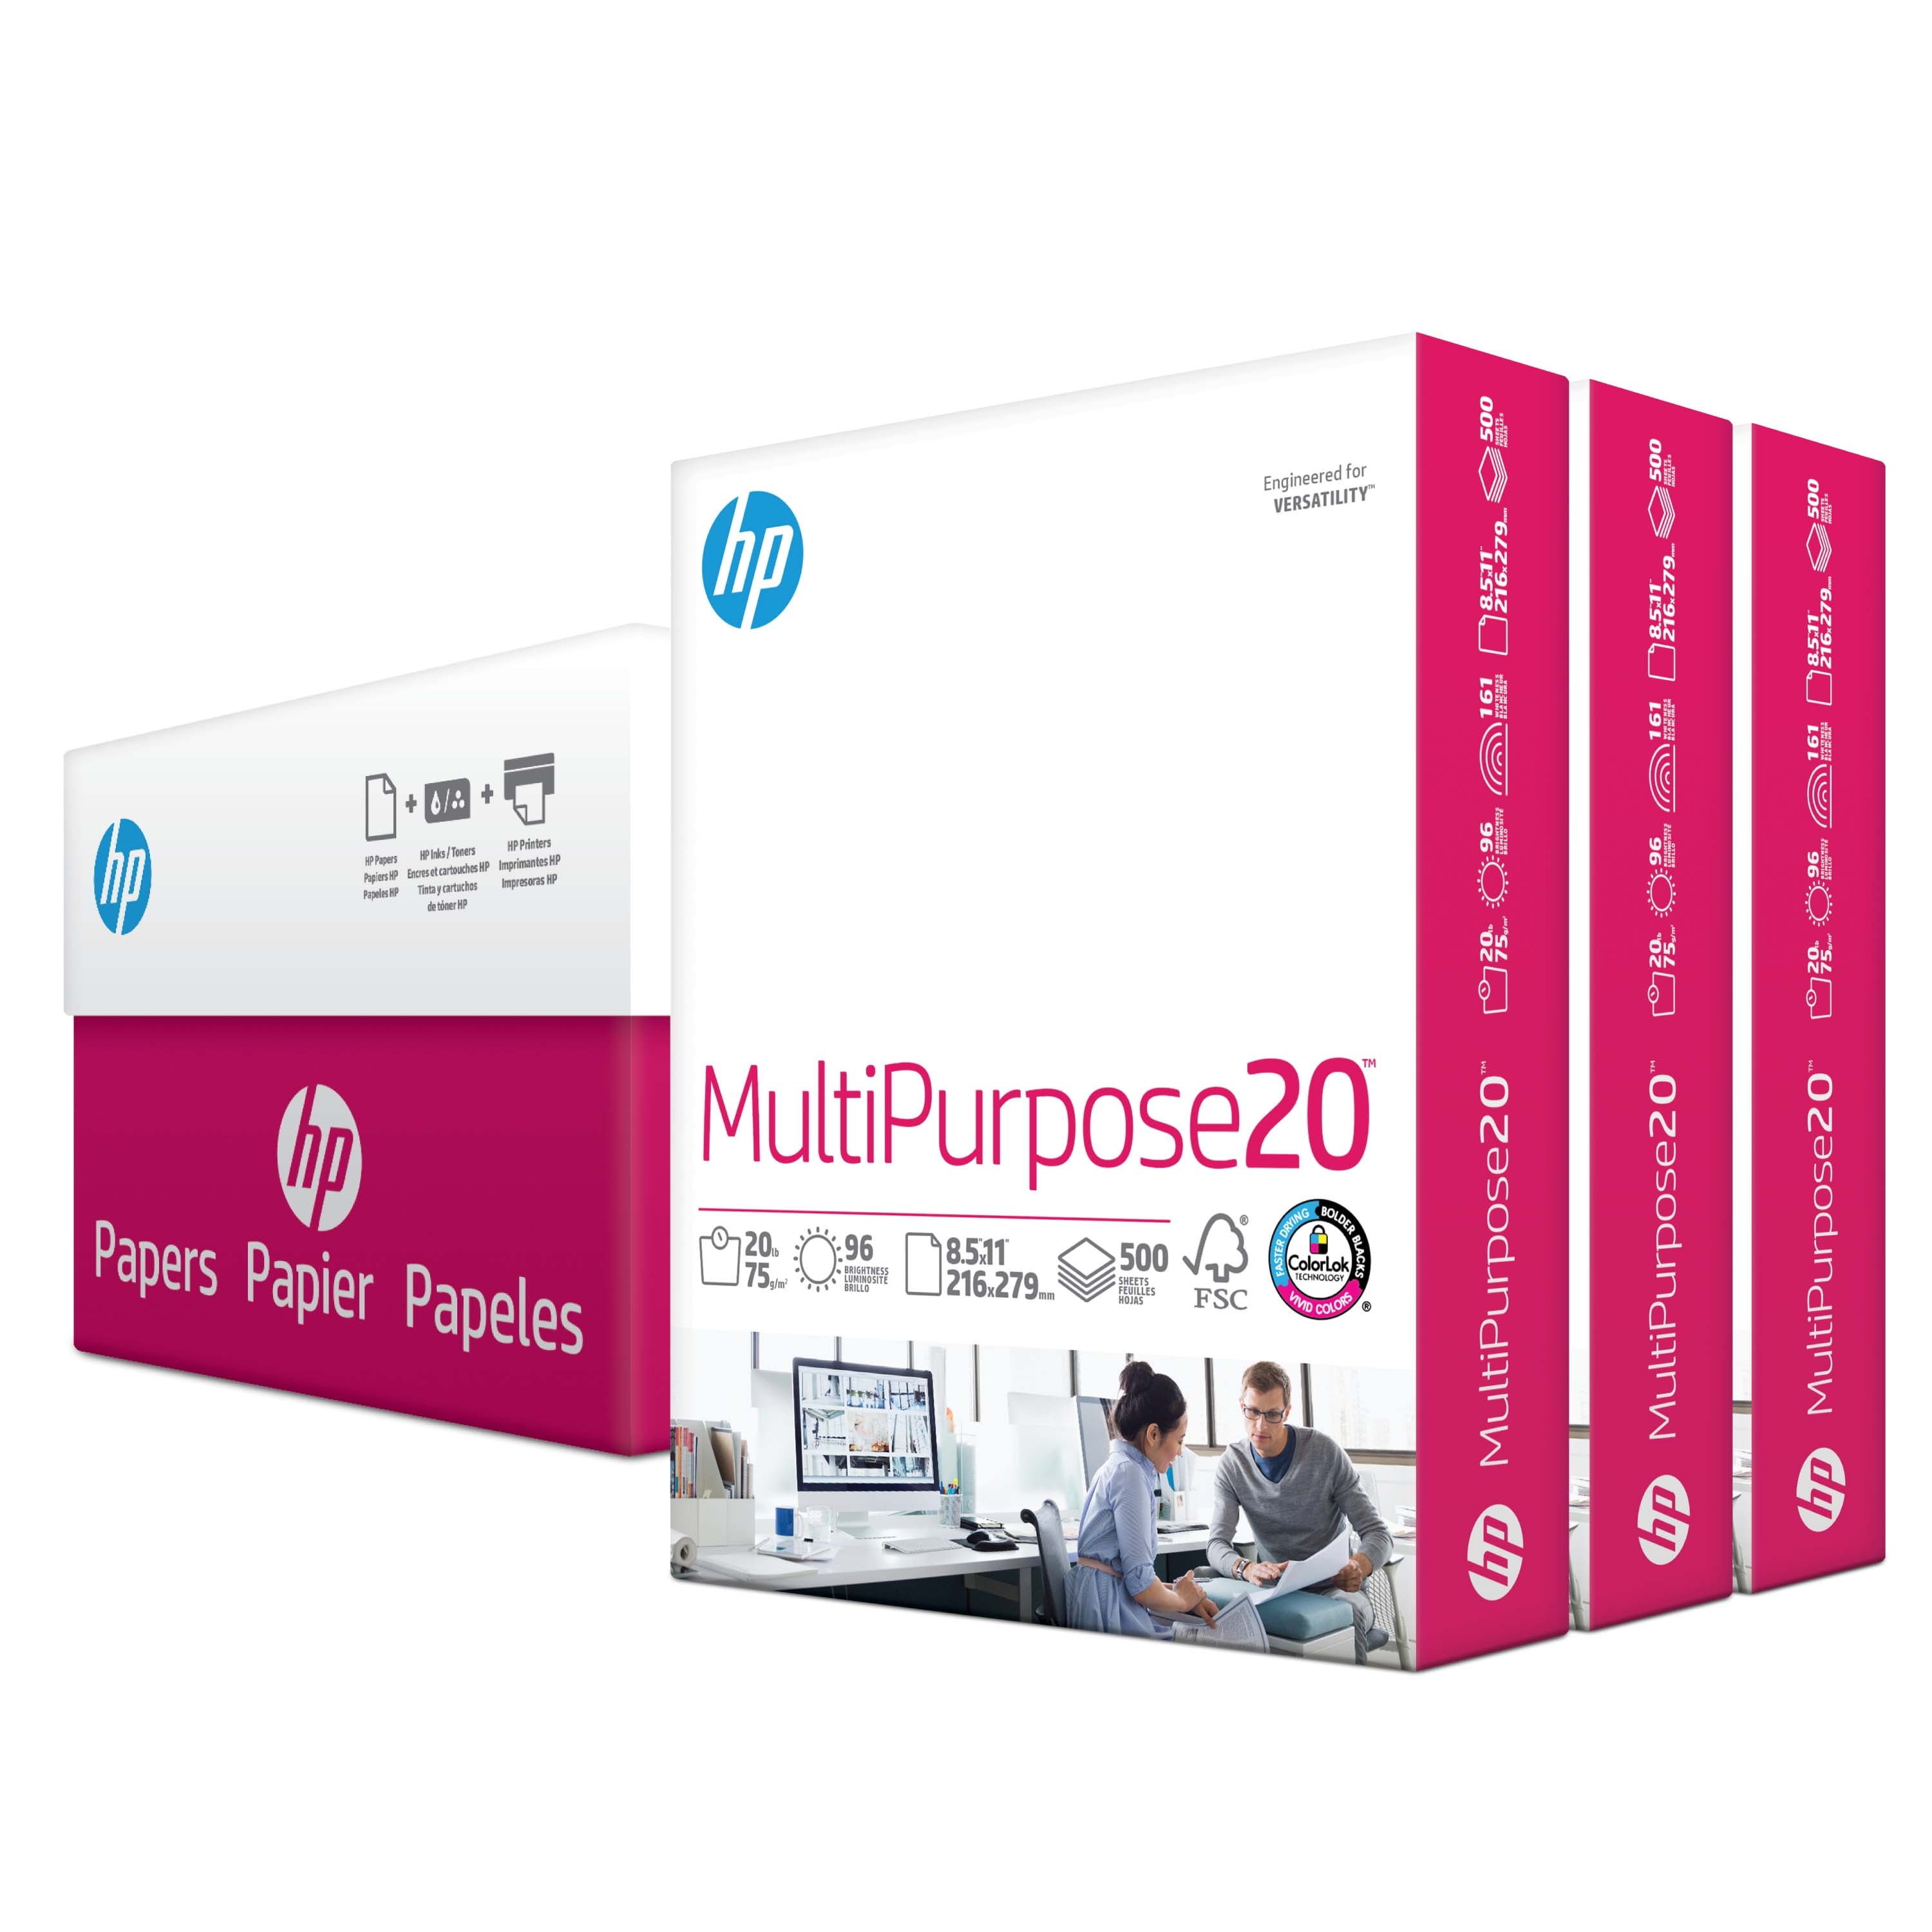 HP Printer Paper, Multipurpose, 8.5x11, 20lb, 96 Bright, 3 Ream, White